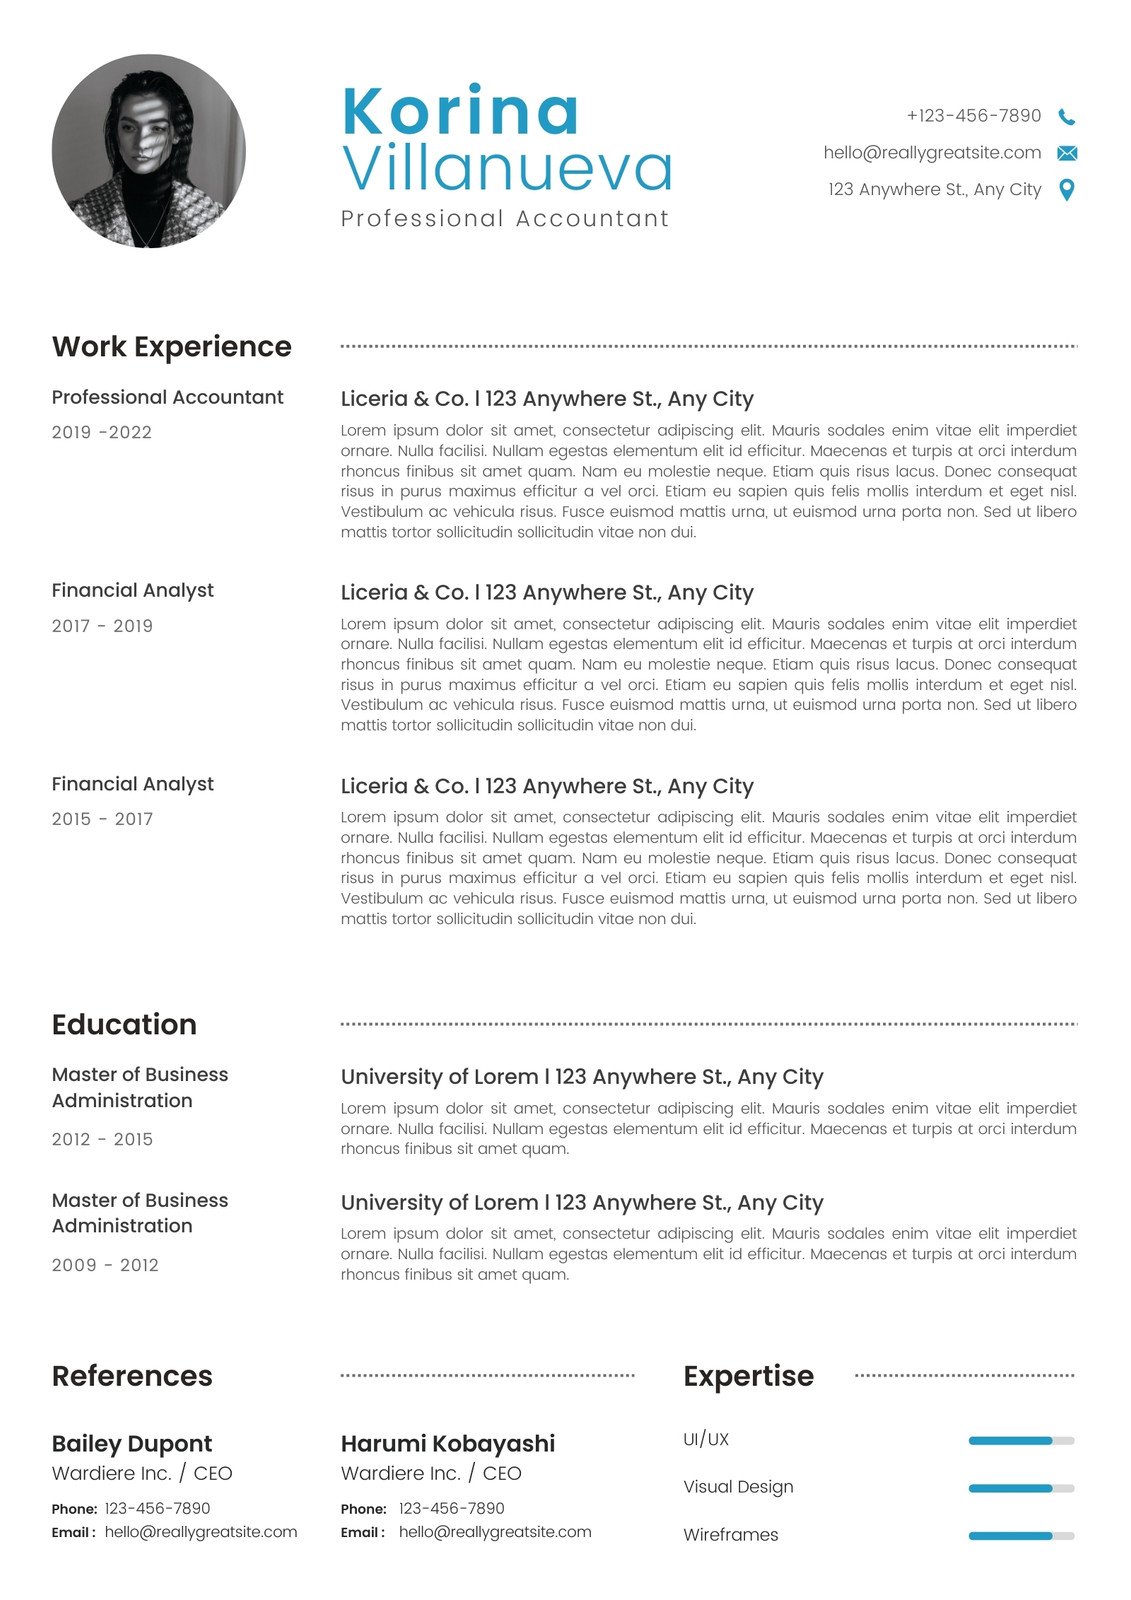 Nodig hebben Ass hoorbaar Free, custom professional infographic resume templates | Canva